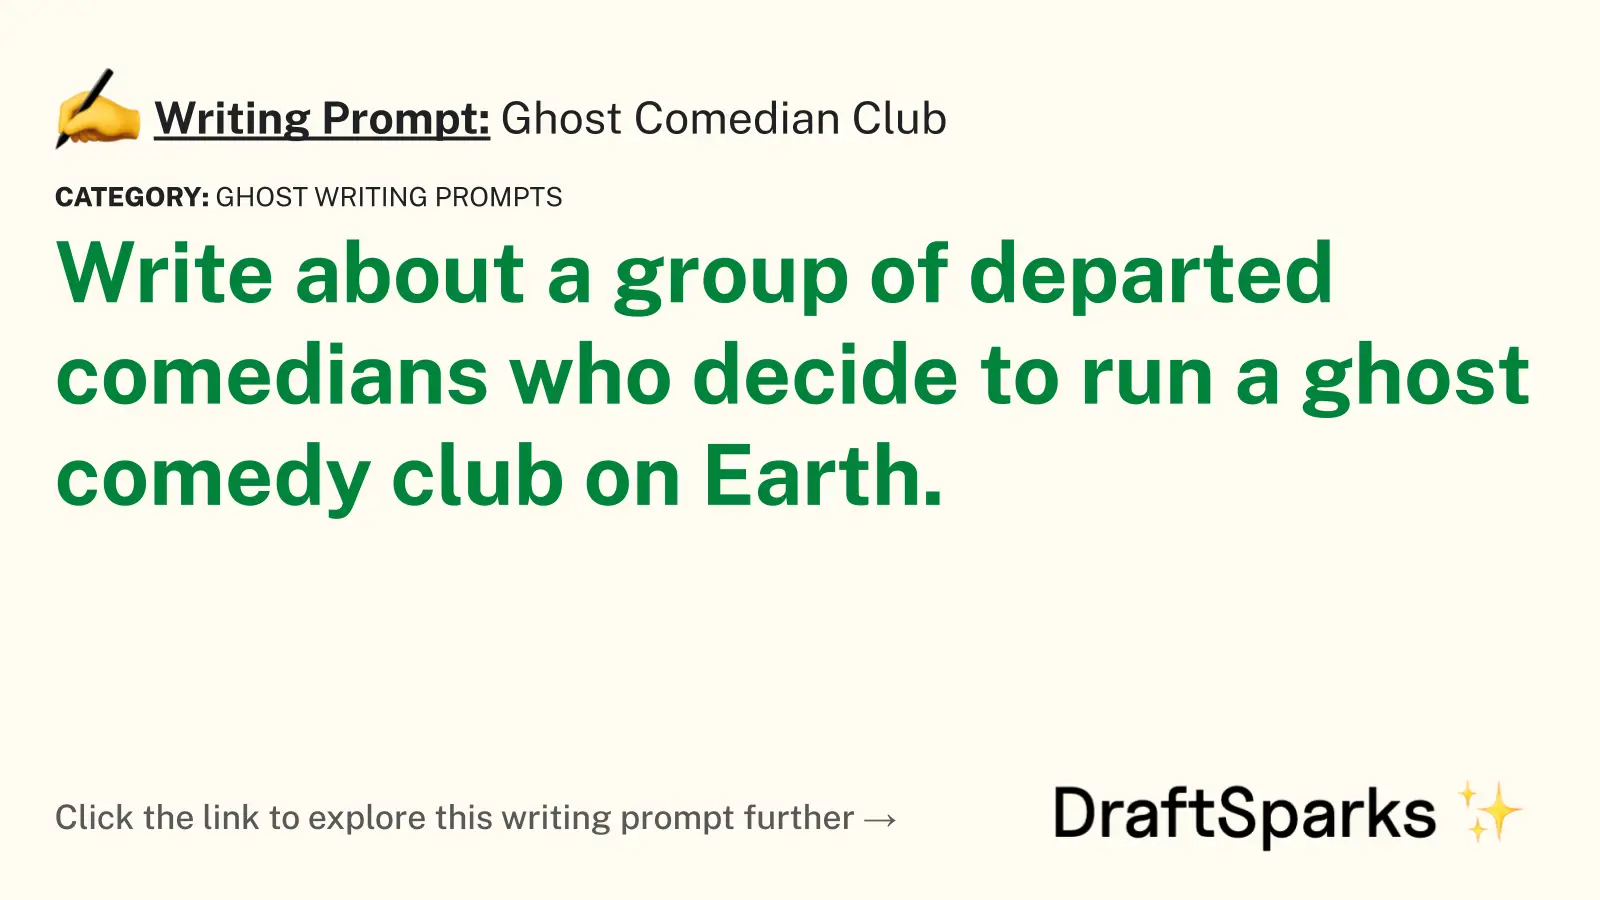 Ghost Comedian Club